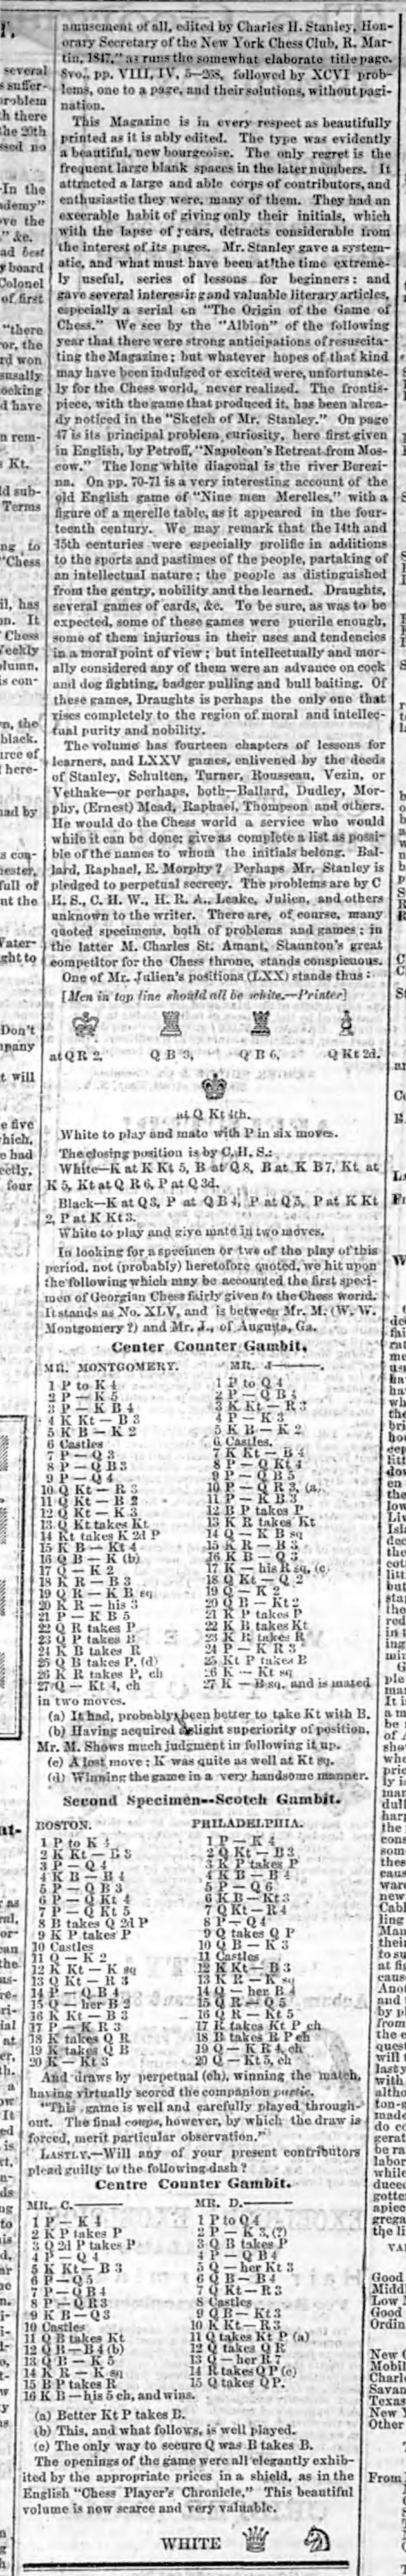 1867.04.19-02 Macon Georgia Weekly Telegraph.jpg